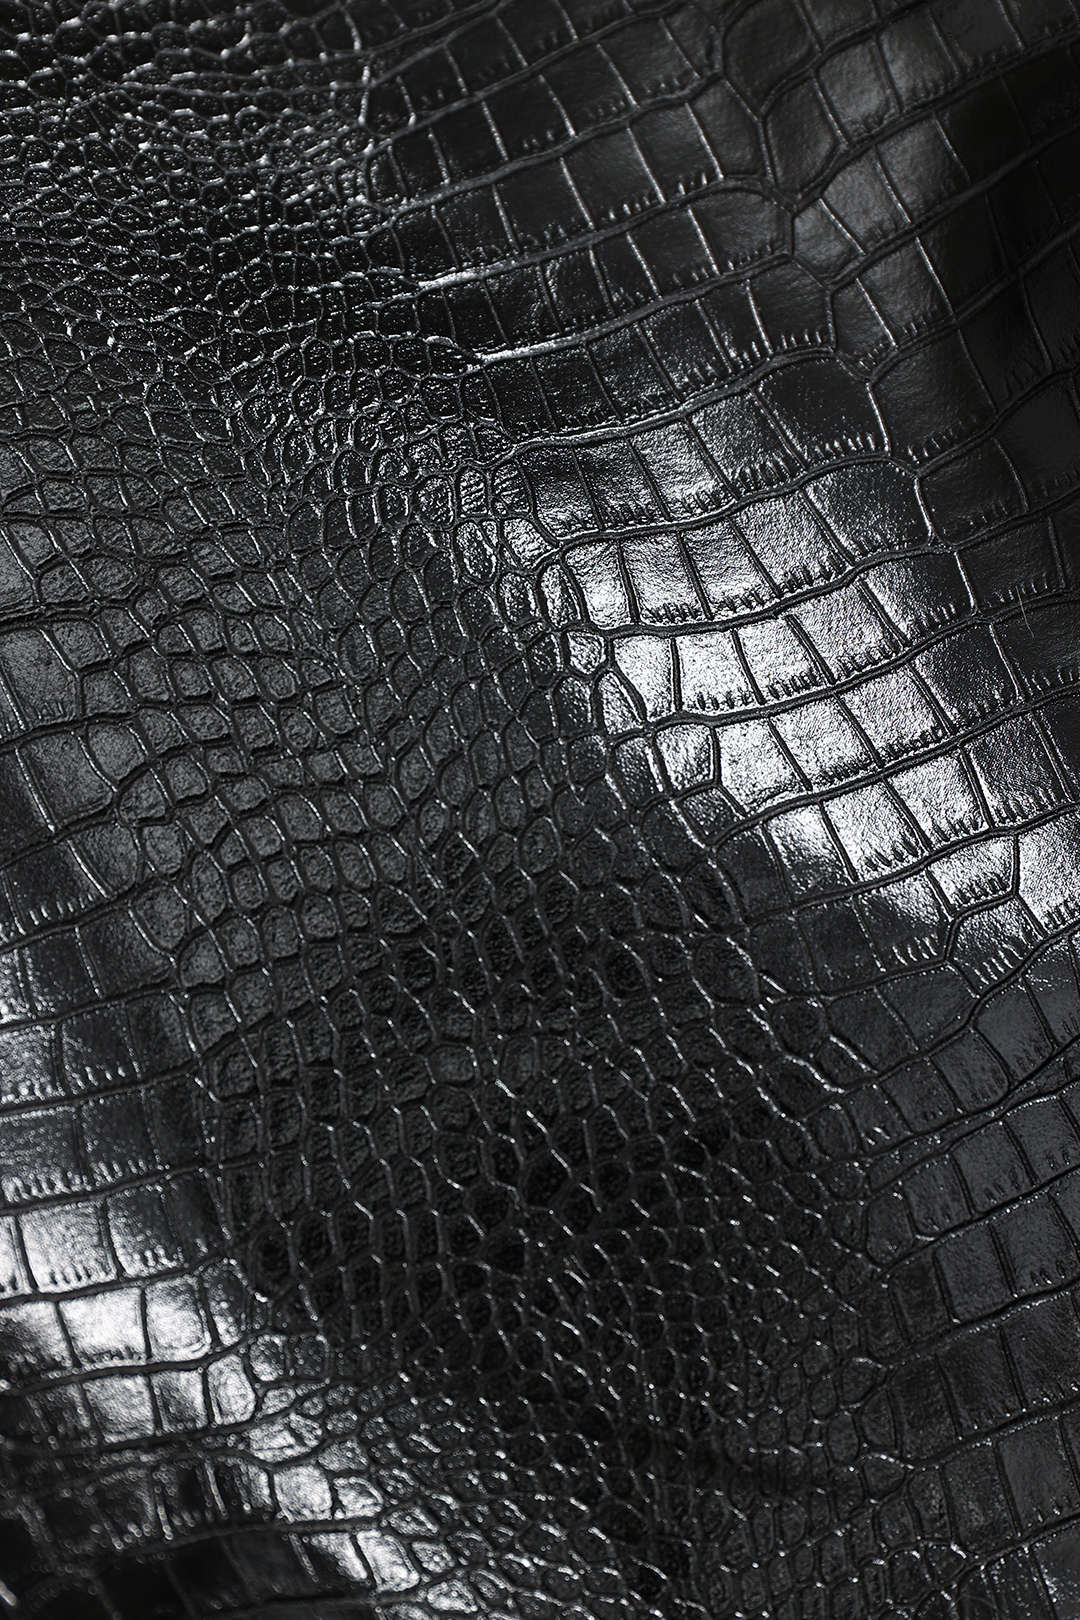 Croc-effect Leather Elasticated Hem Jacket